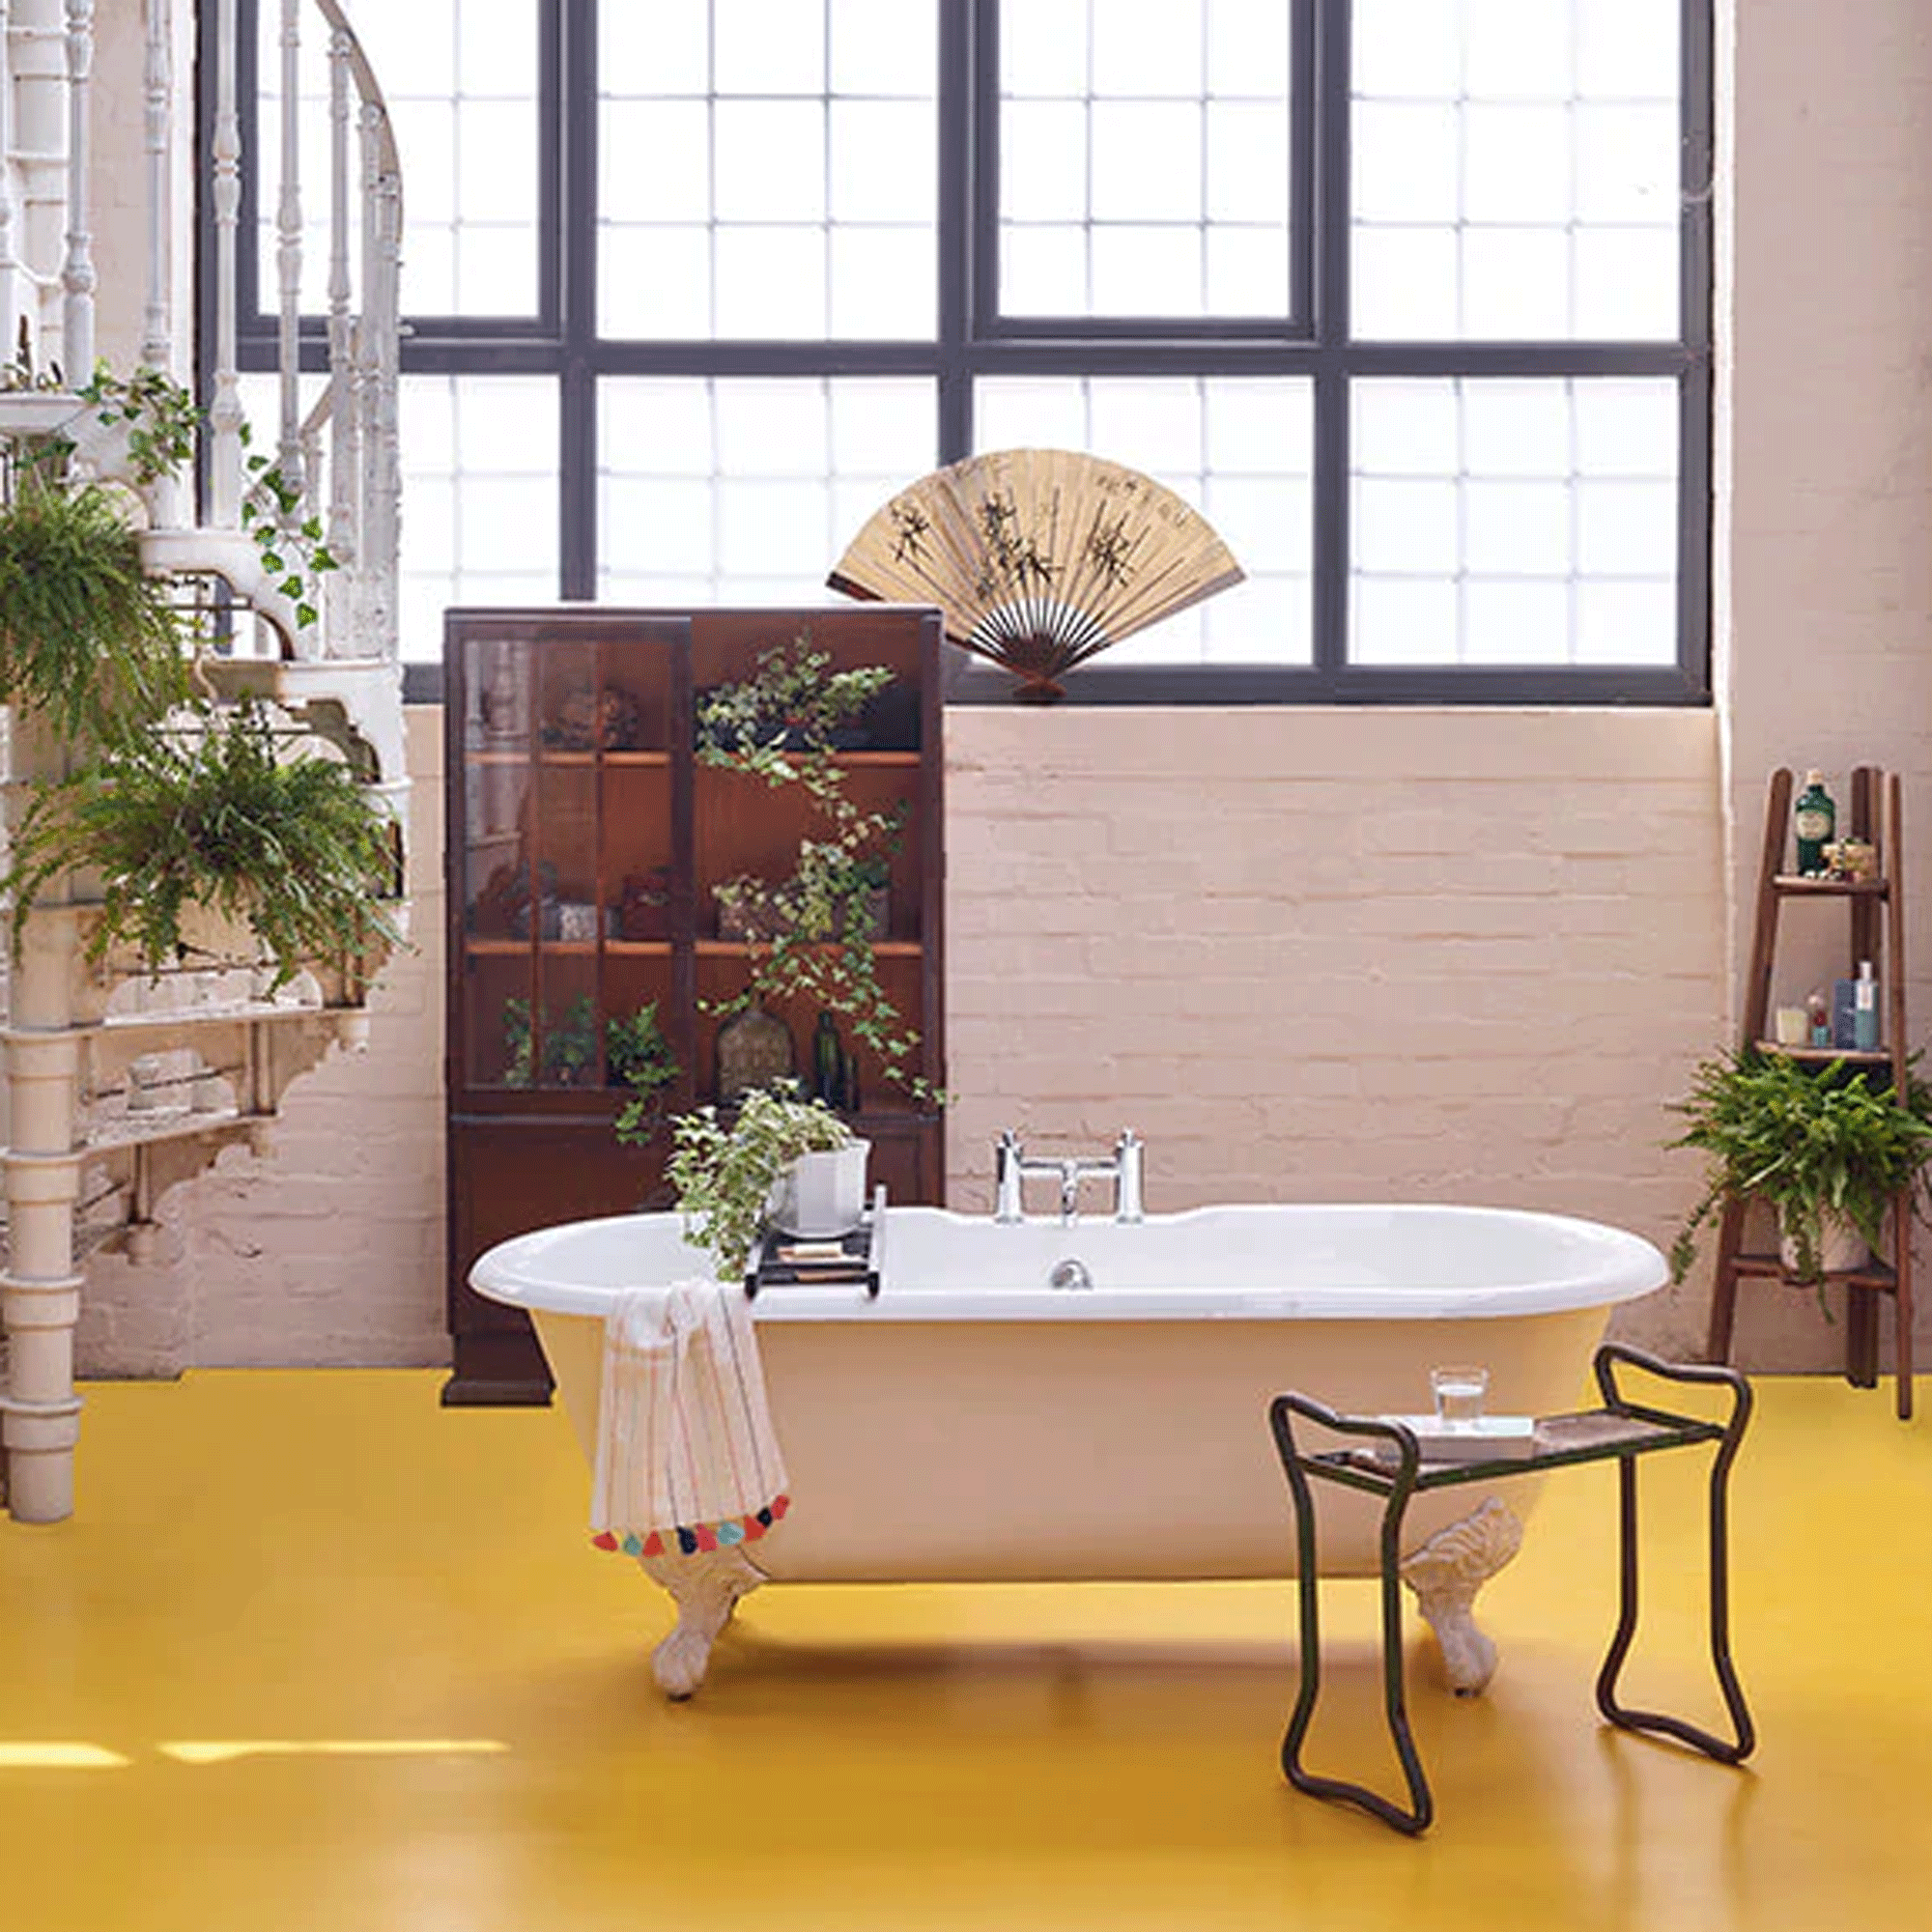 Freestanding bath with yellow vinyl flooring